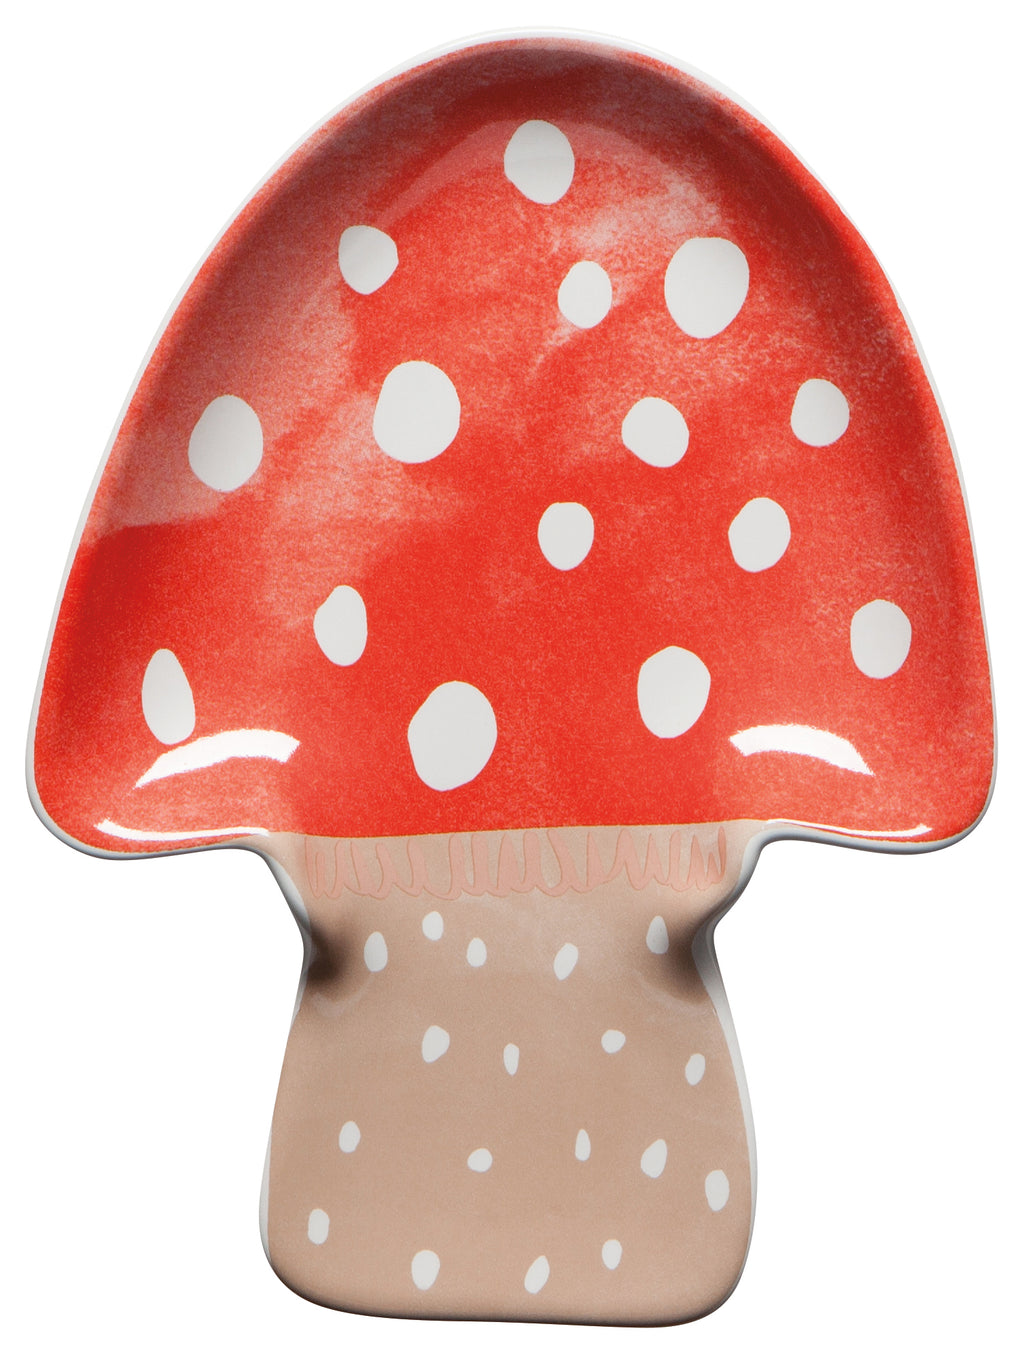 Mushroom Shaped Spoon Rest | Now Designs